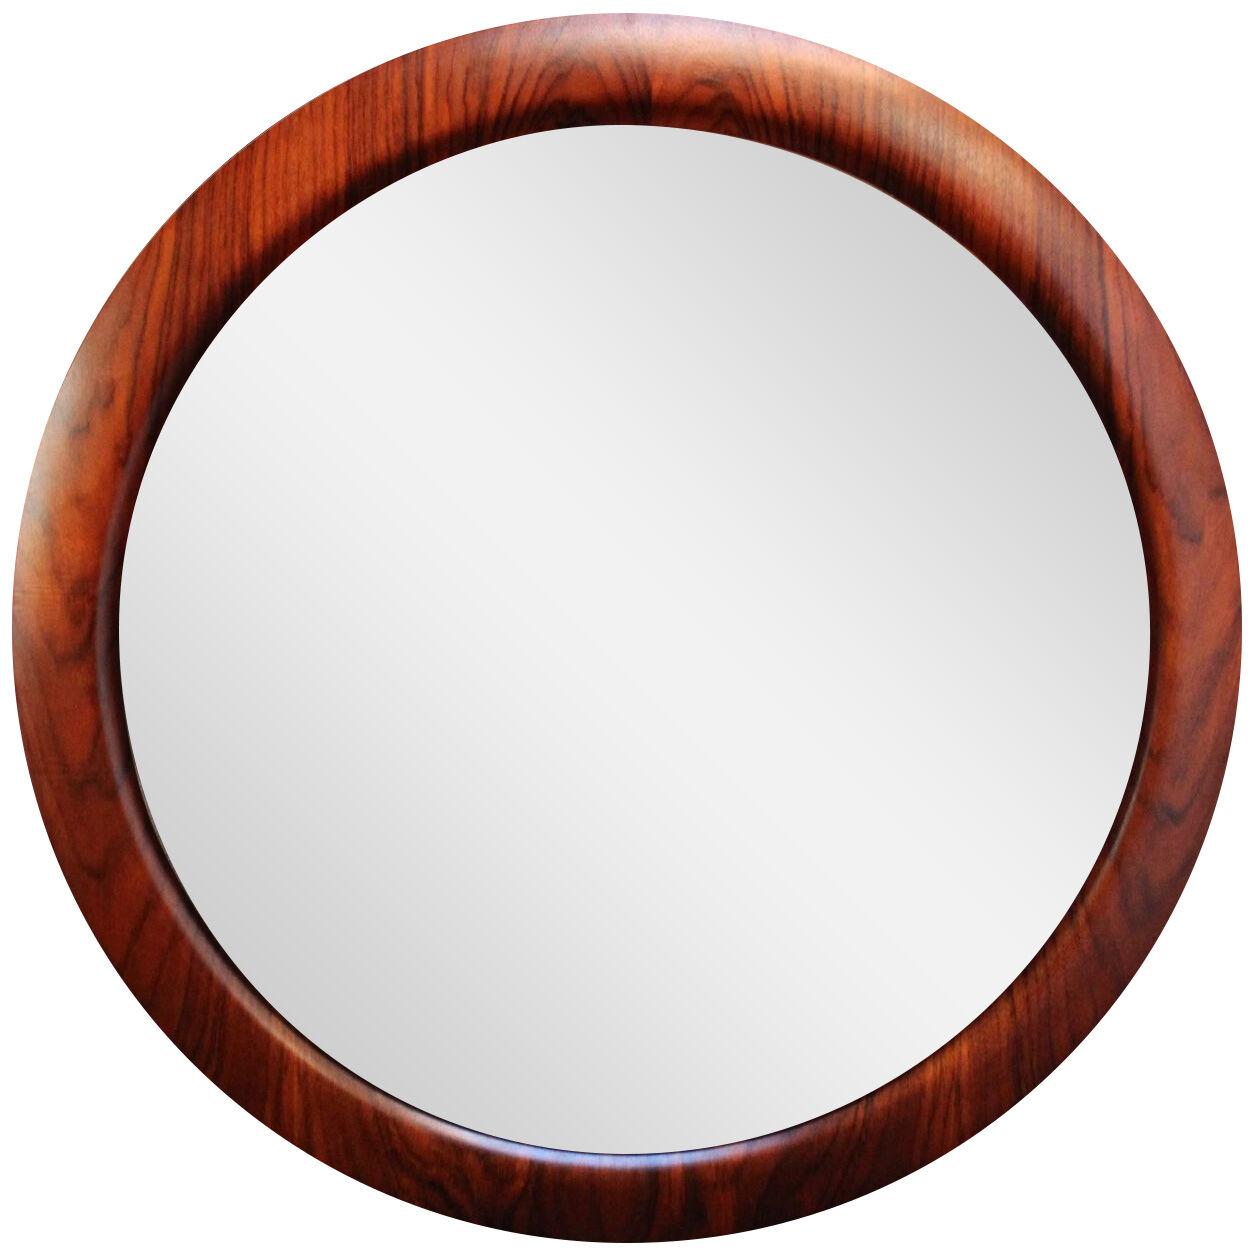 Large Round Italian Modernist Rosewood and Chrome Mirror by Mac Arredamenti